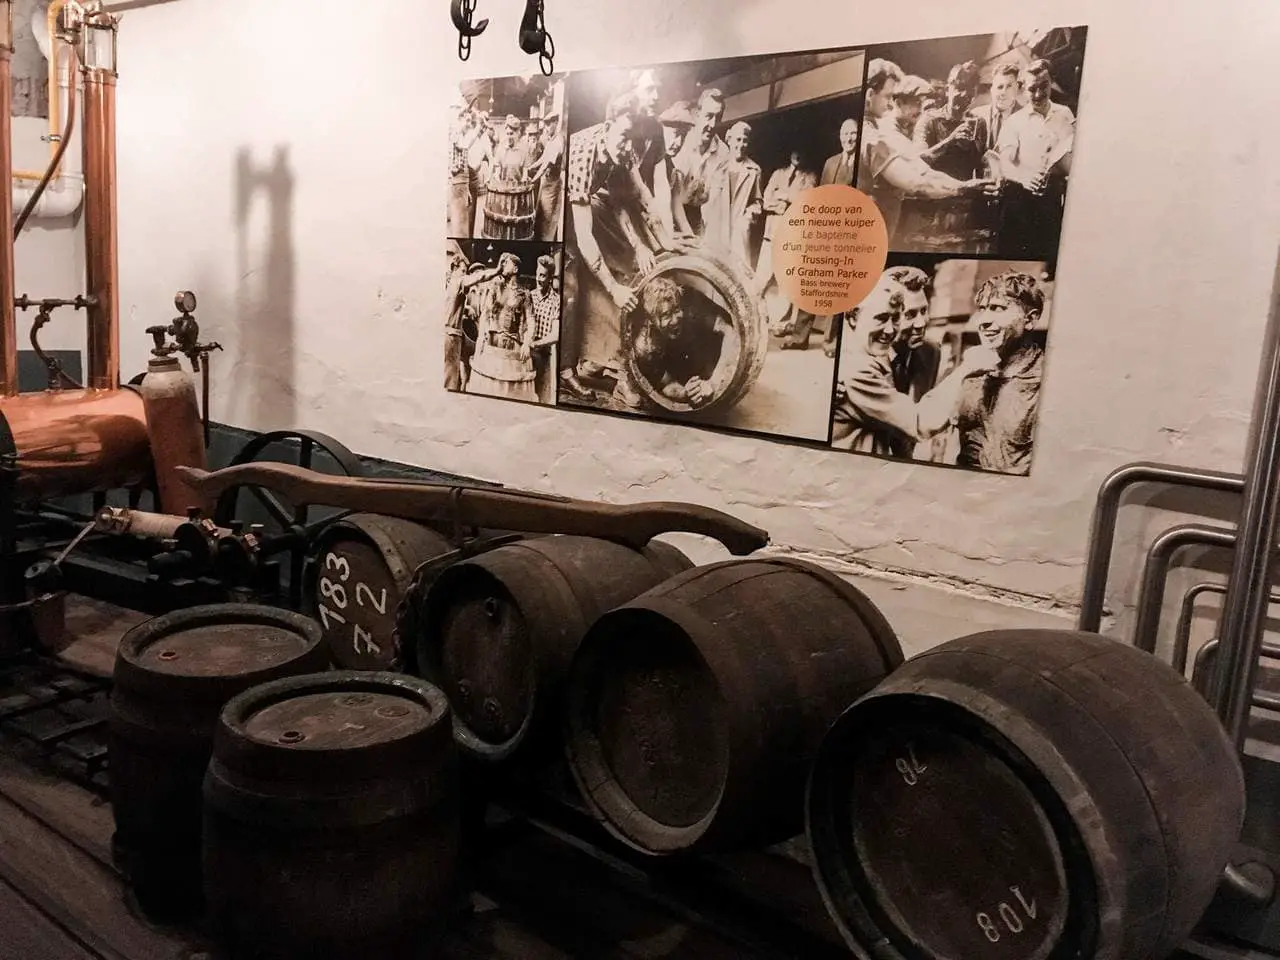 Beer cellar on the De Halve Maan Bruges Brewery tour